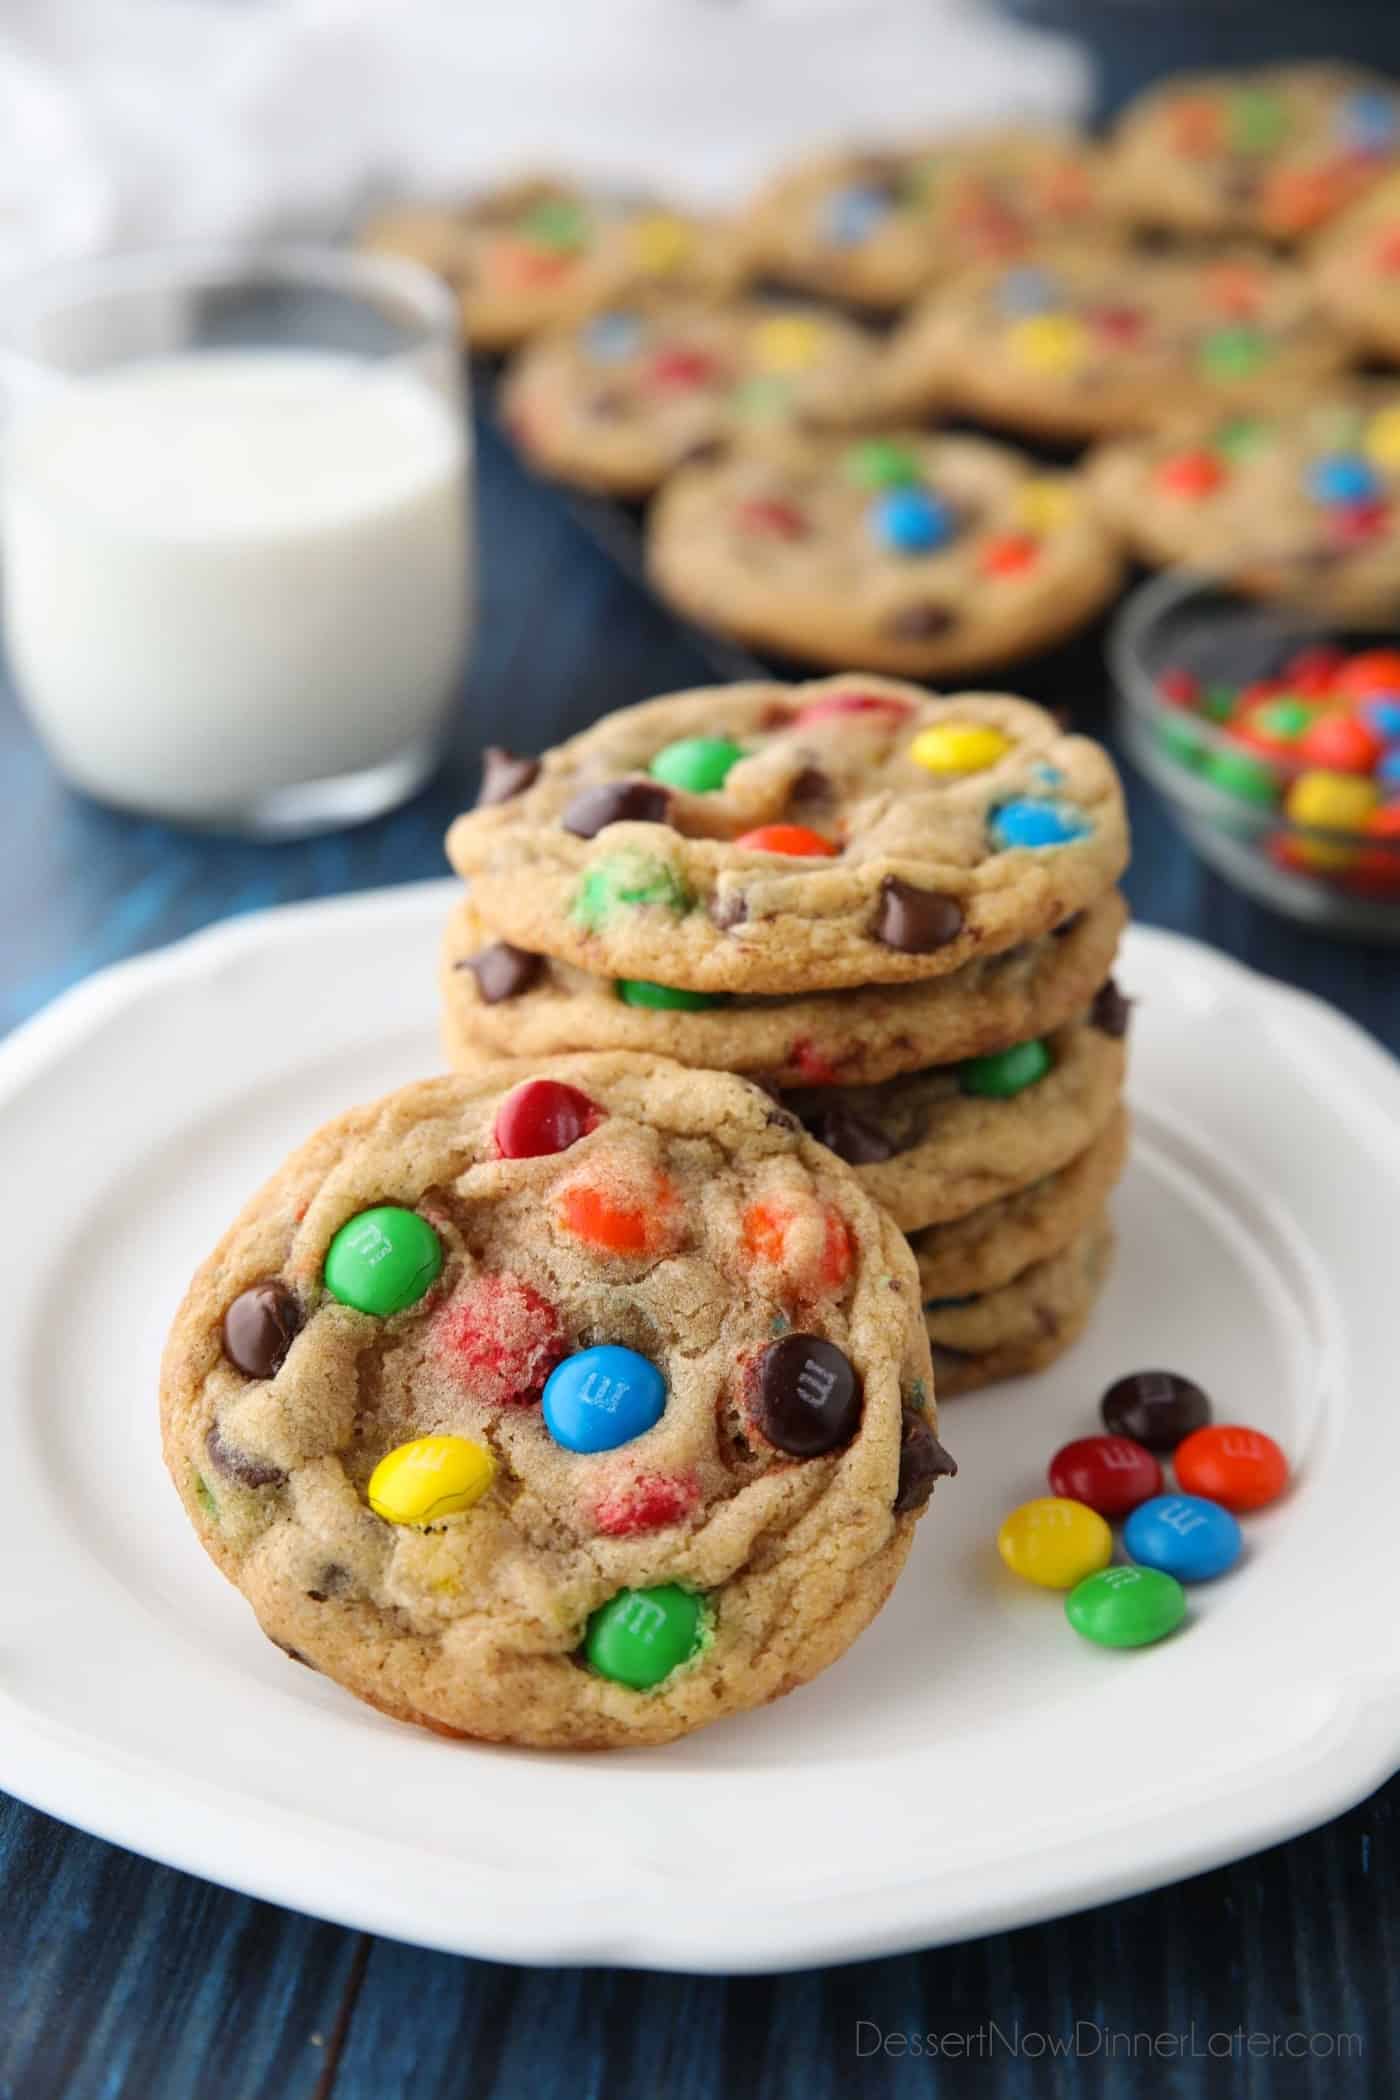 https://www.dessertnowdinnerlater.com/wp-content/uploads/2020/04/MM-Cookies-1.jpg